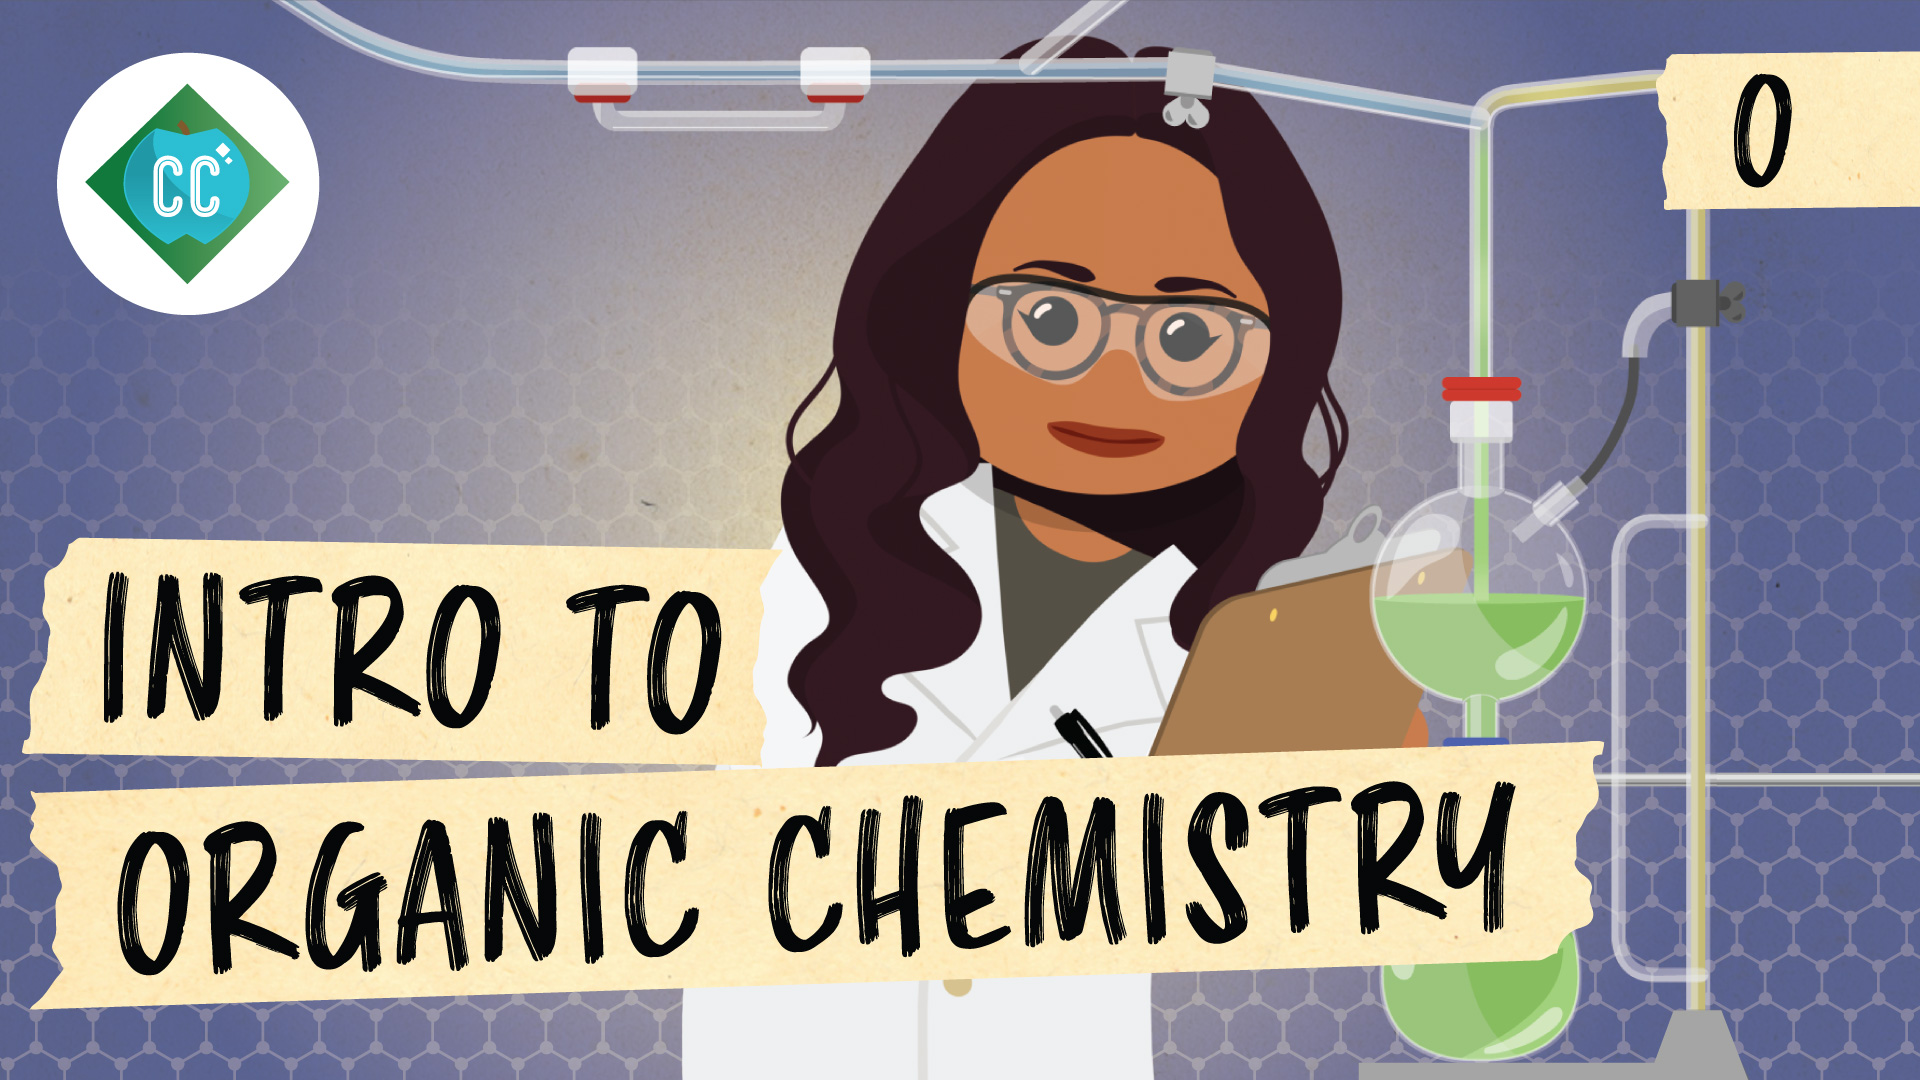 Crash Course Organic Chemistry